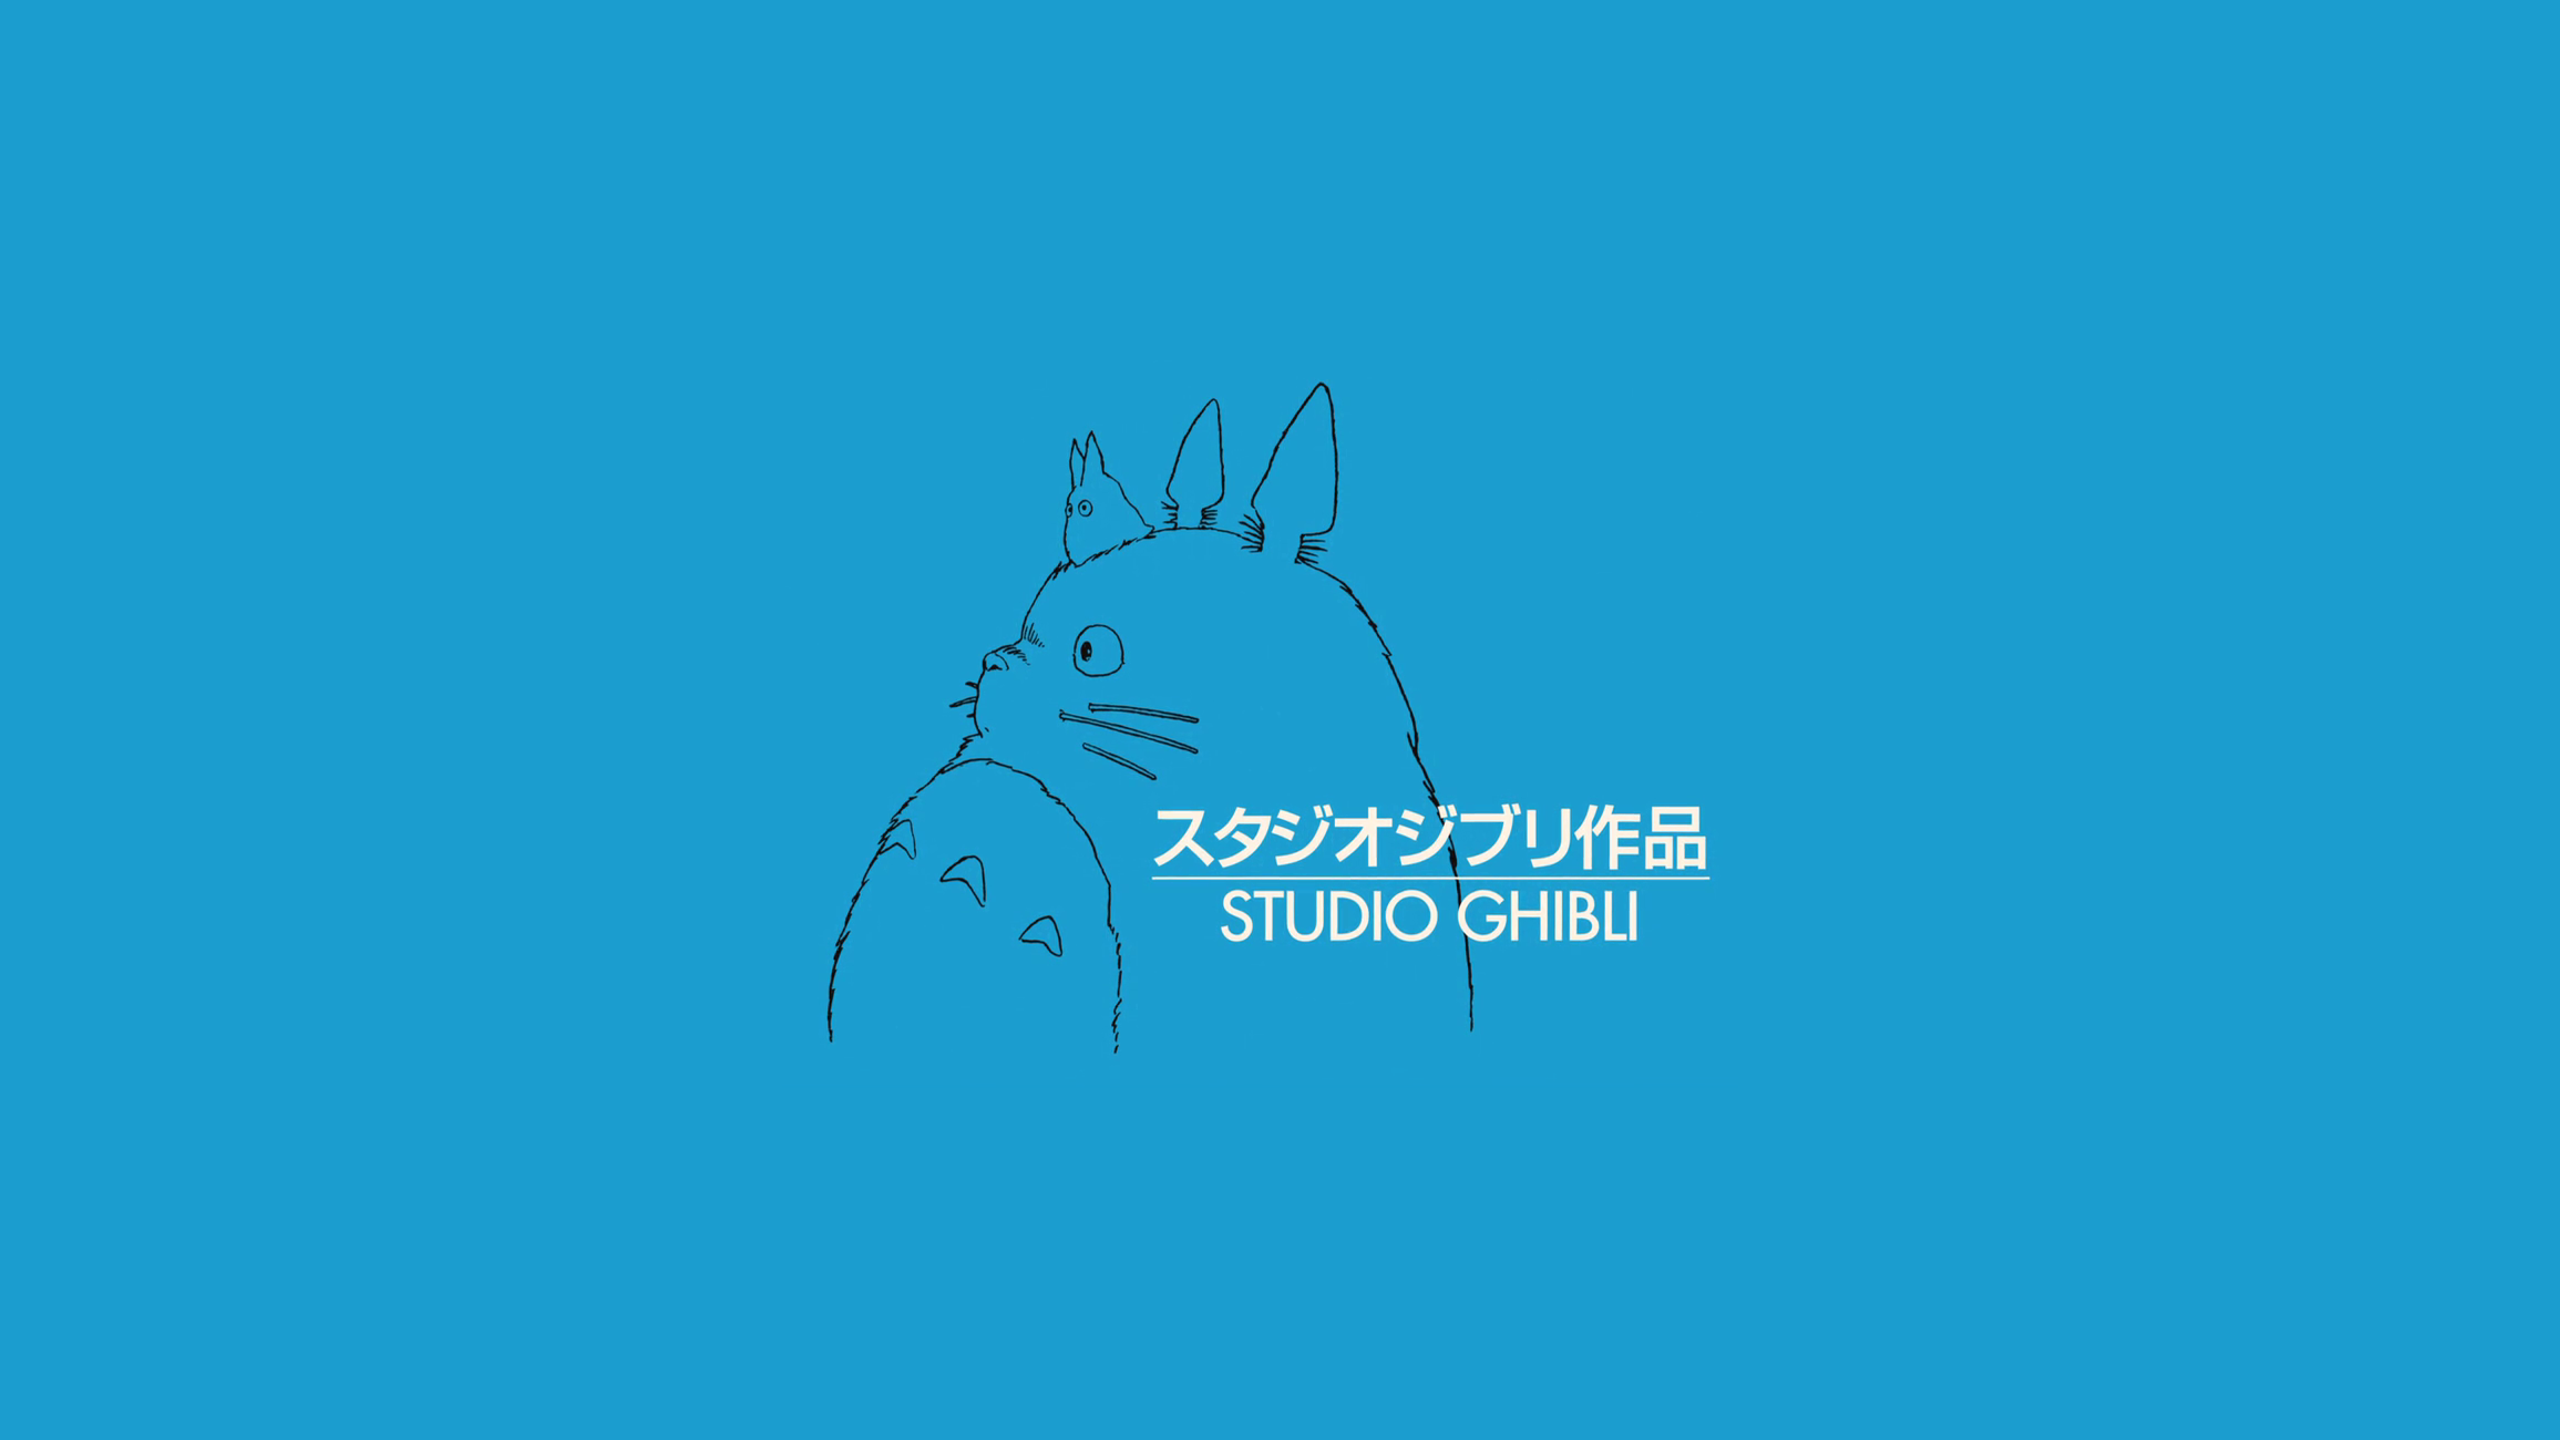 100 Studio Ghibli wallpapers   Album on Imgur